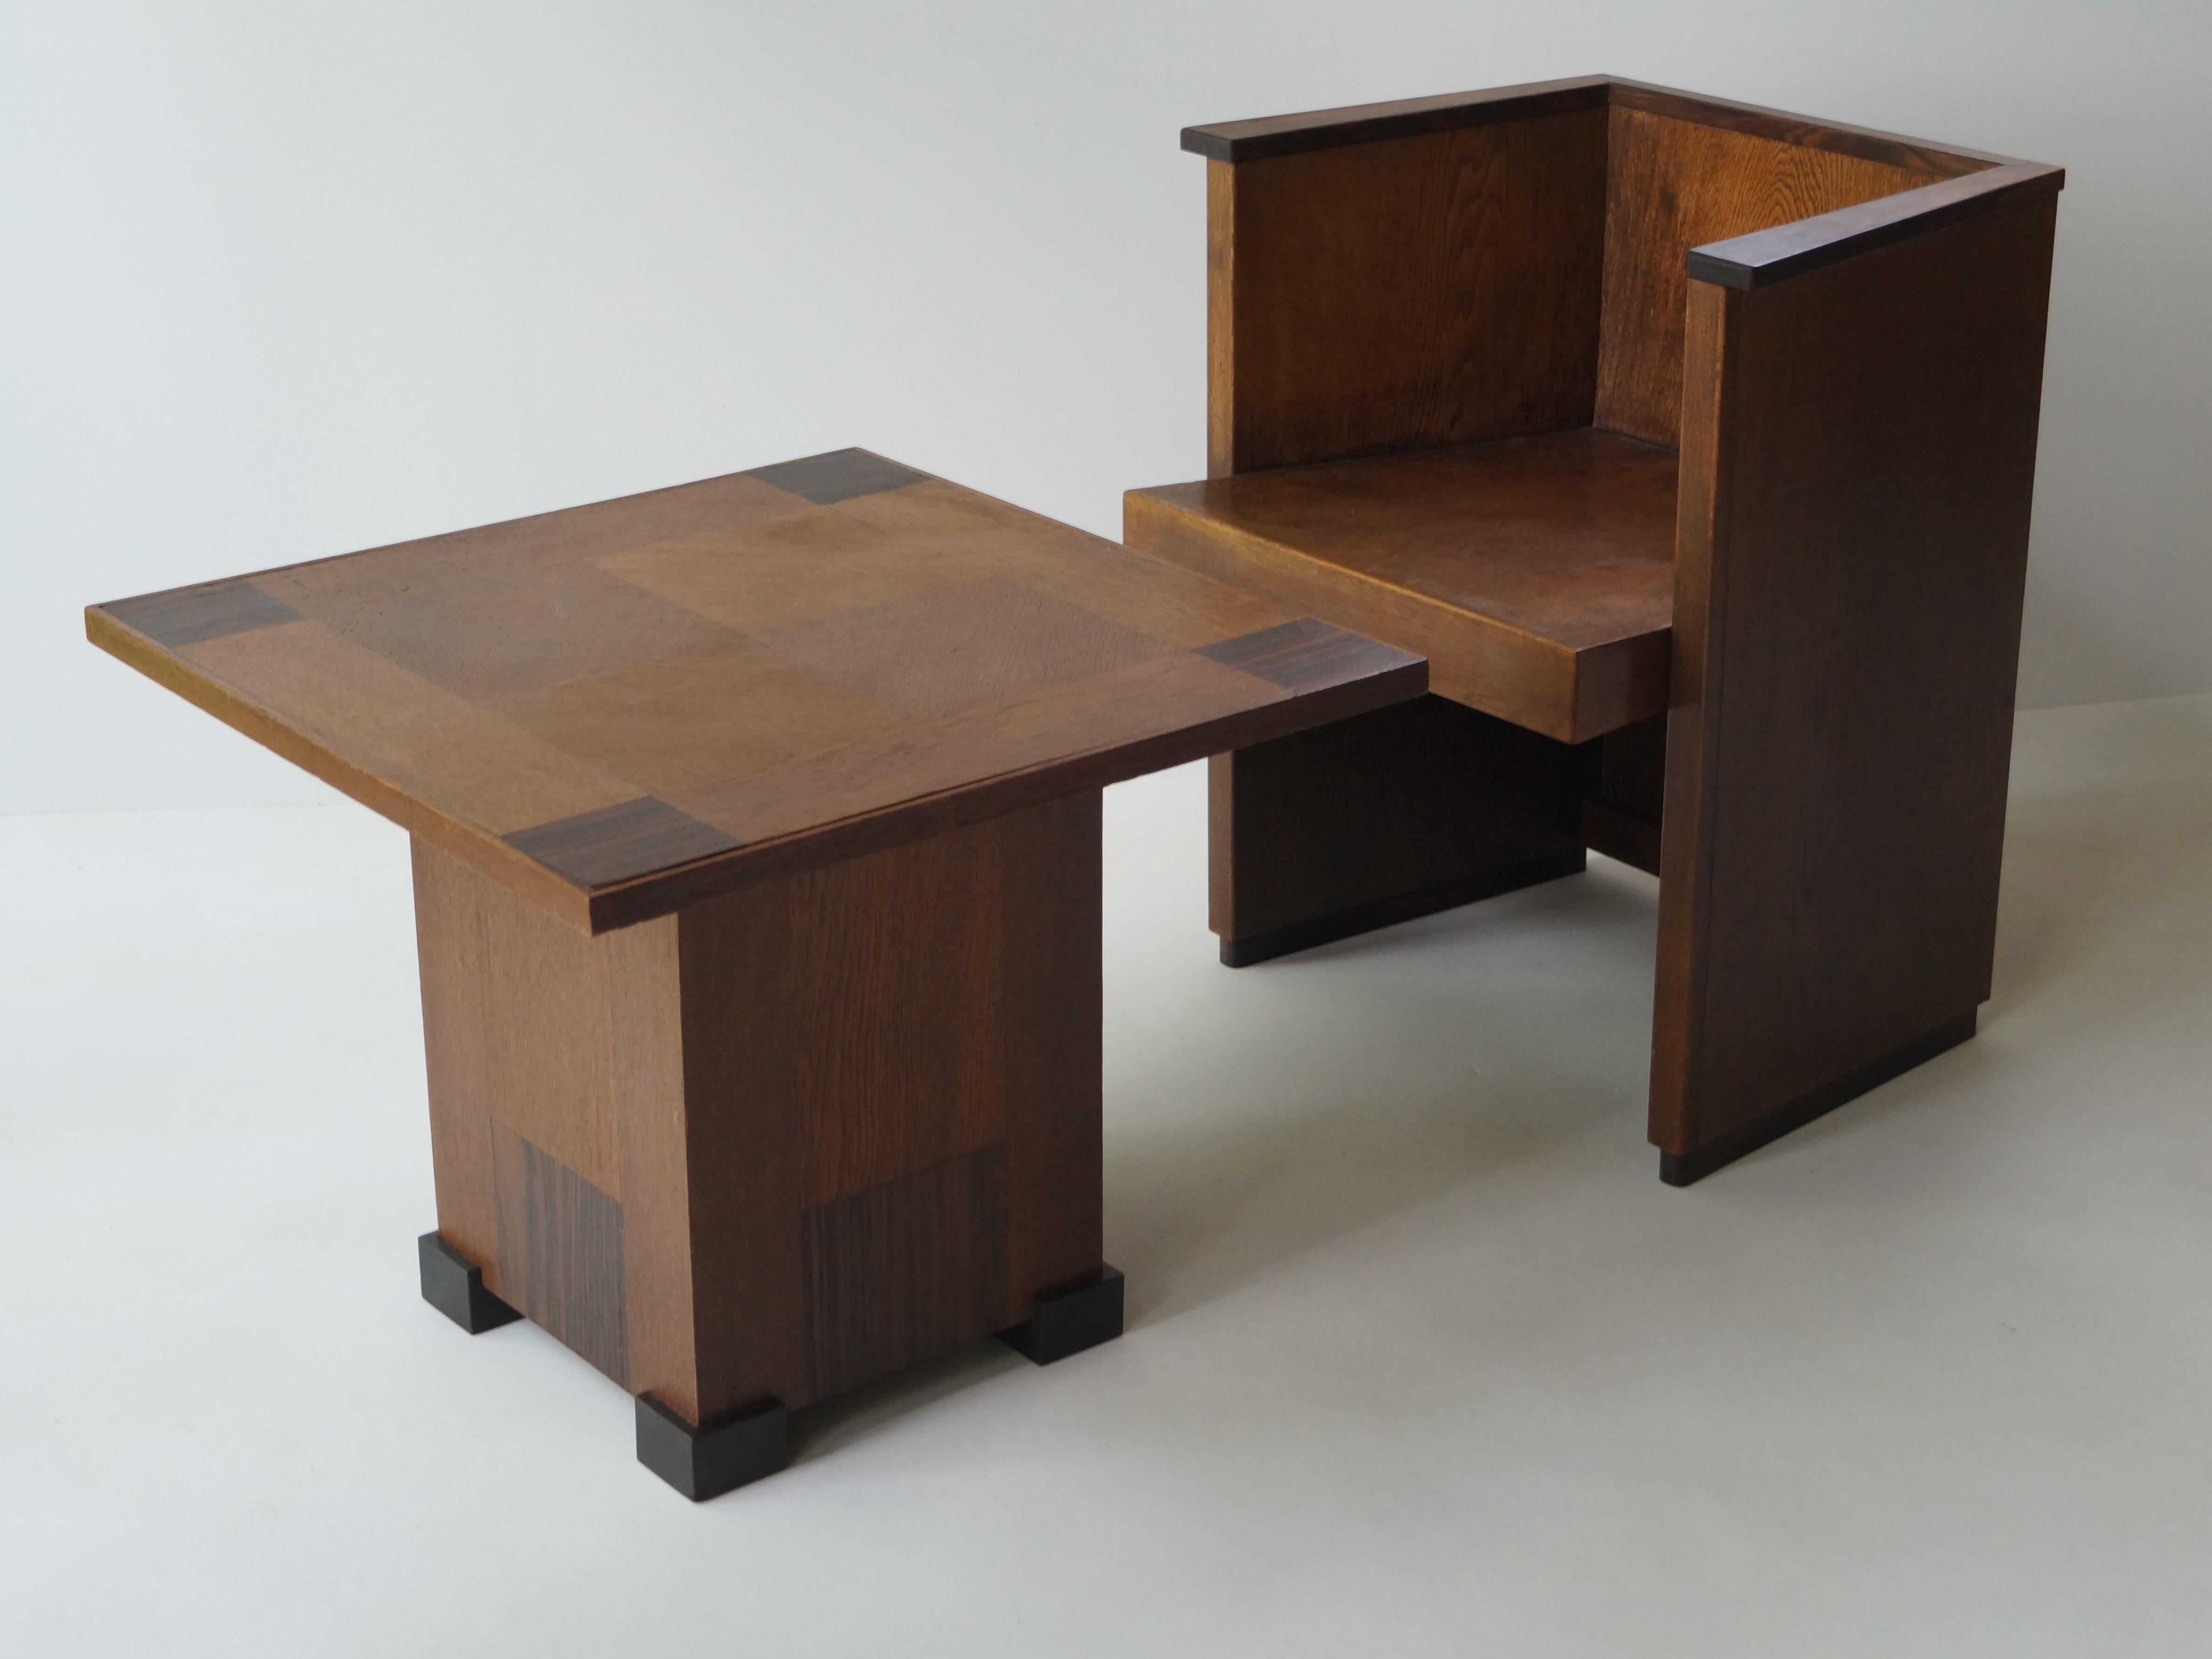 Dutch Art Deco Modernist coffee table in style of P.E.L. Izeren, 1920s For Sale 3